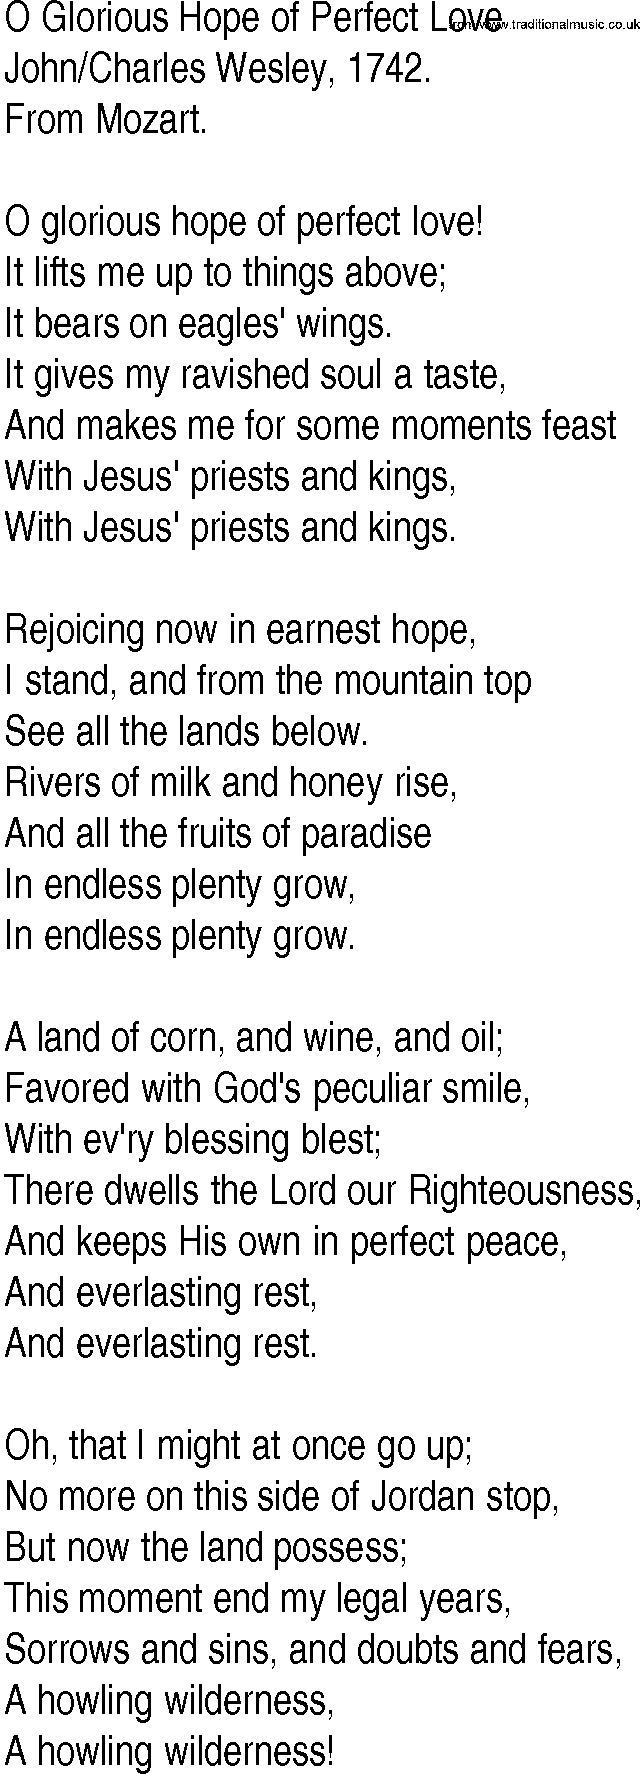 Hymn and Gospel Song: O Glorious Hope of Perfect Love by JohnCharles Wesley lyrics